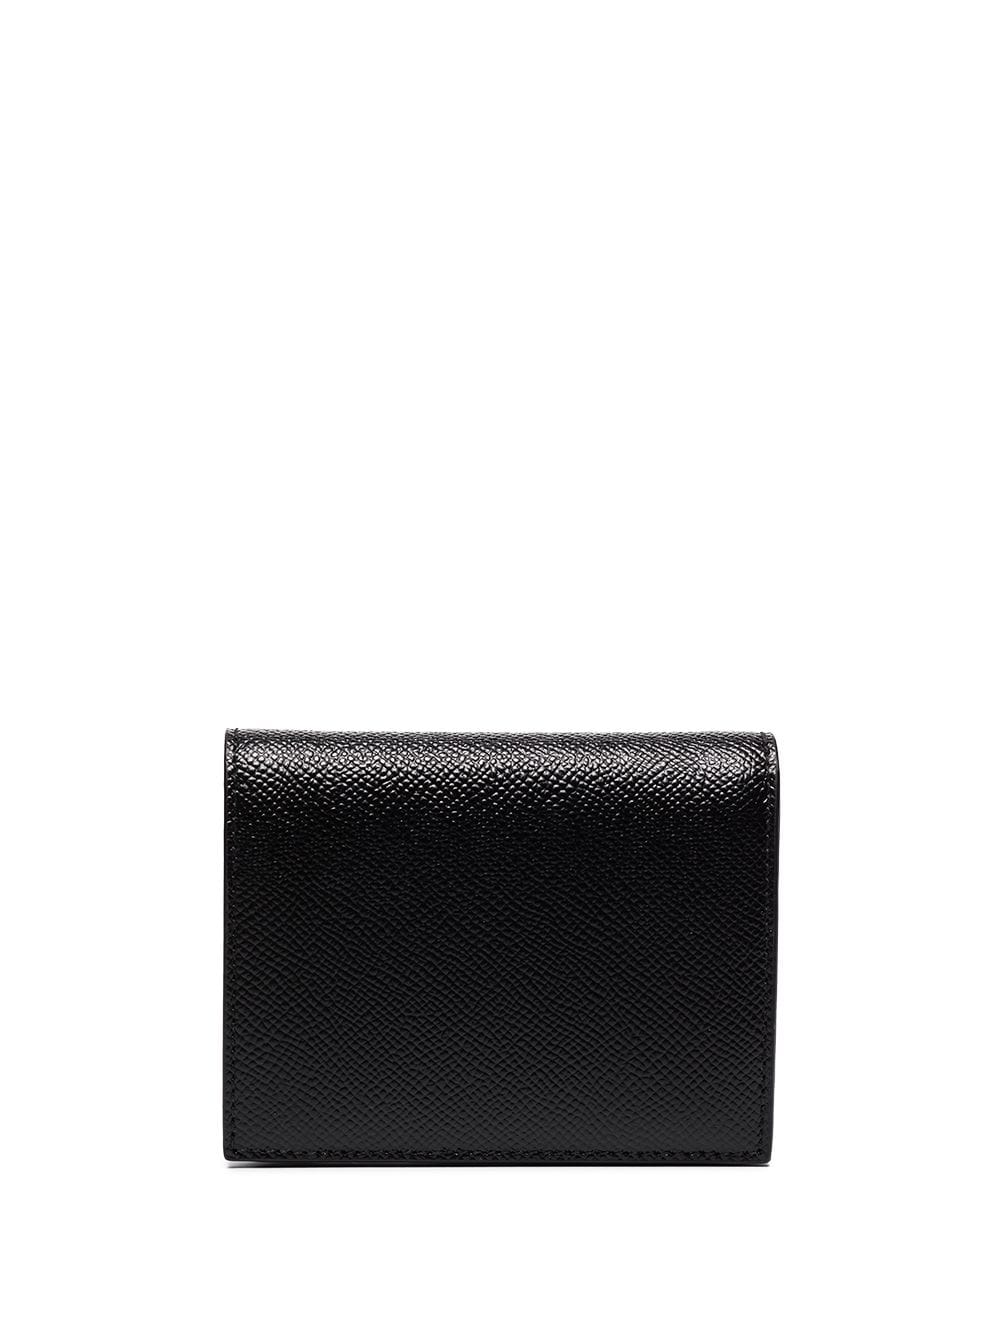 Ferragamo FERRAGAMO- Gancini Leather Flap Wallet